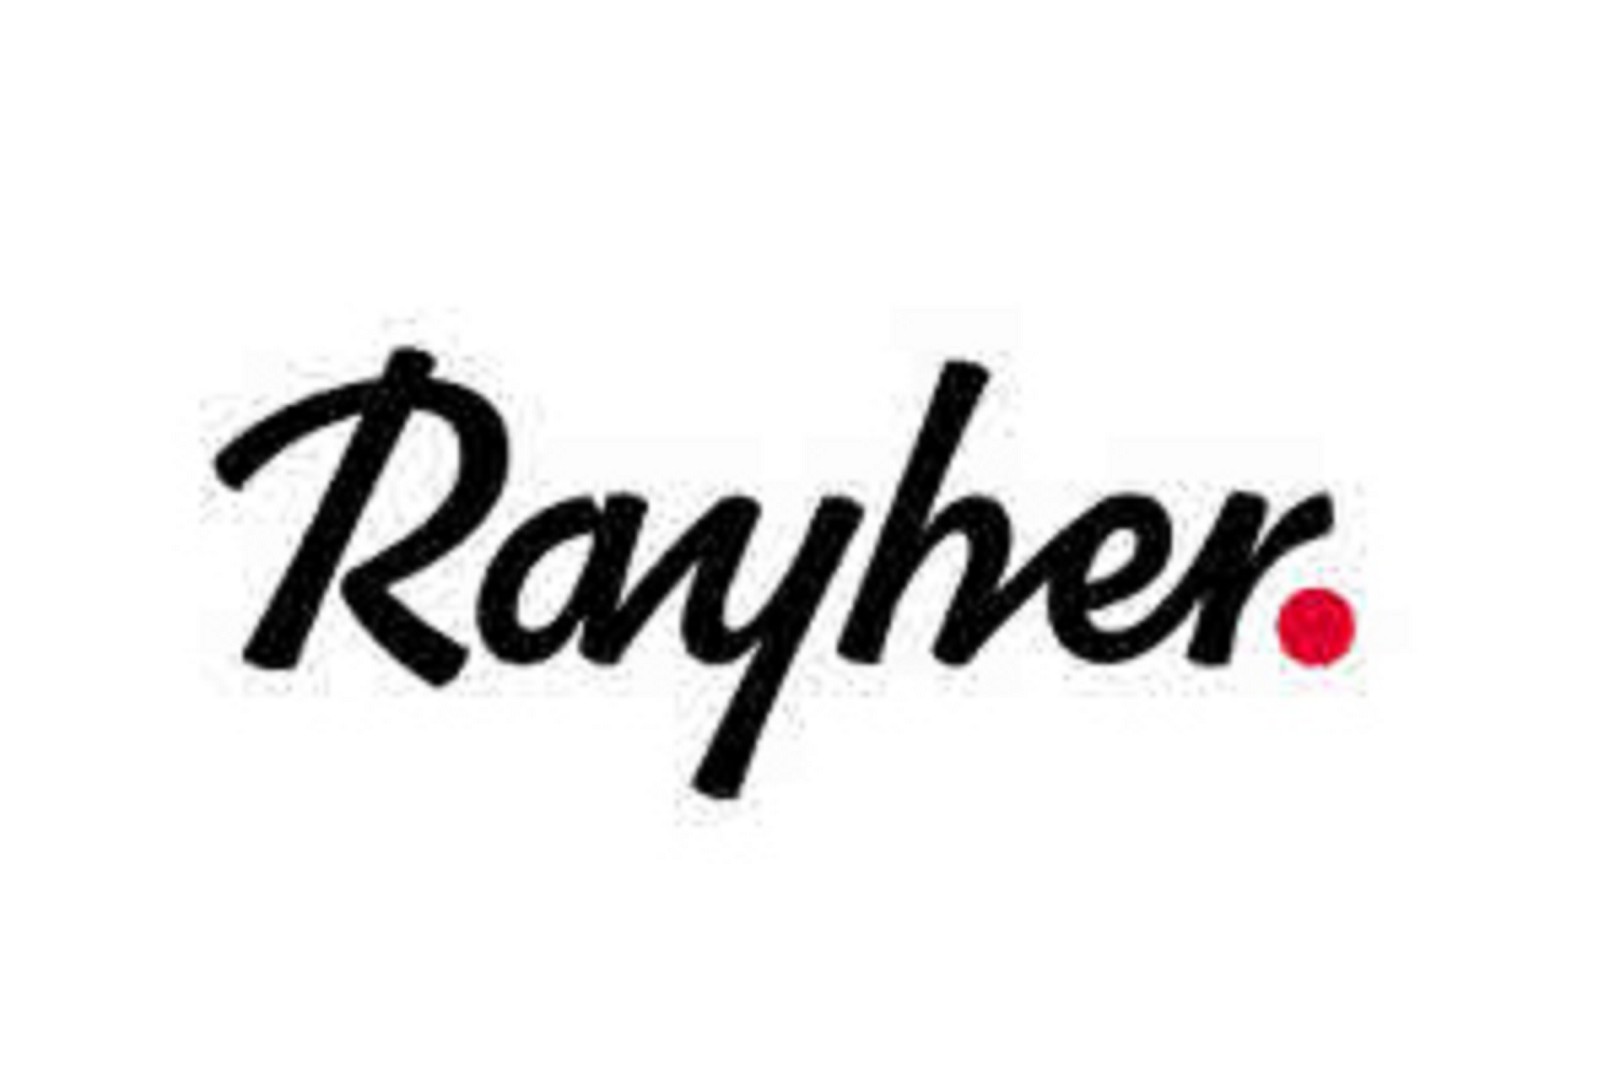 Rayher